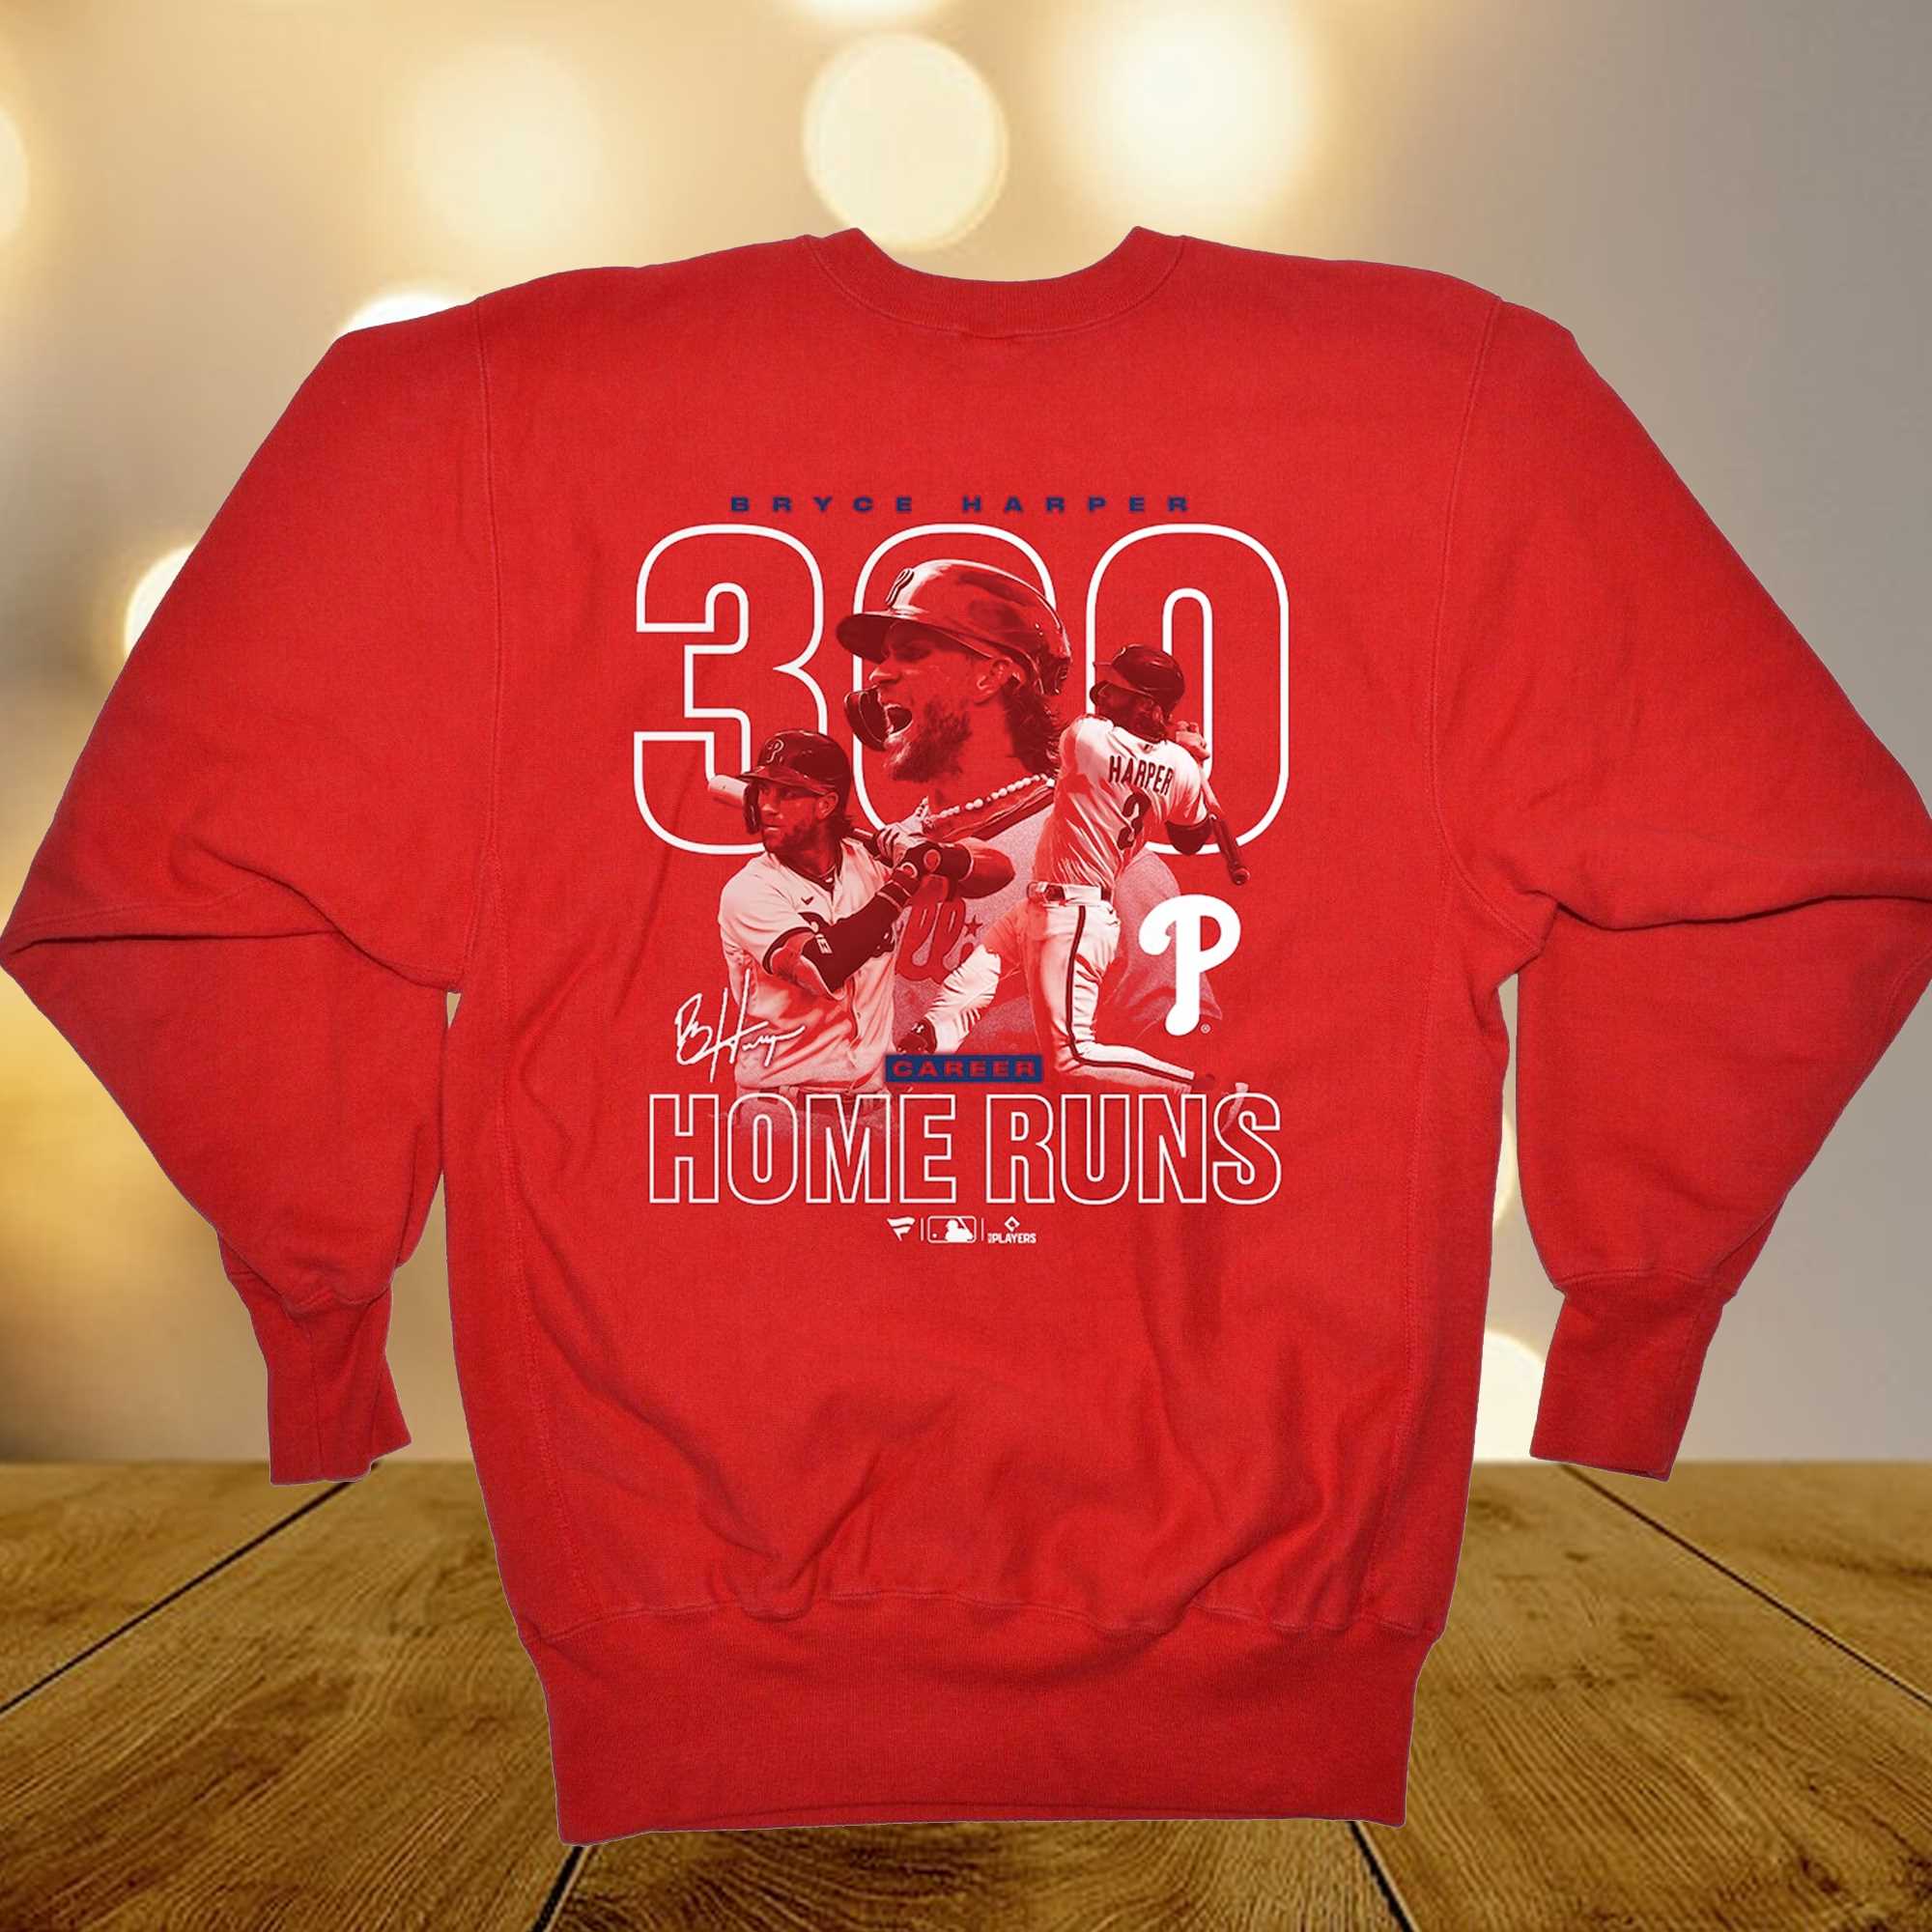 Bryce Harper Shirt, Vintage Philadelphia Phillies Shirt - T-shirts Low Price